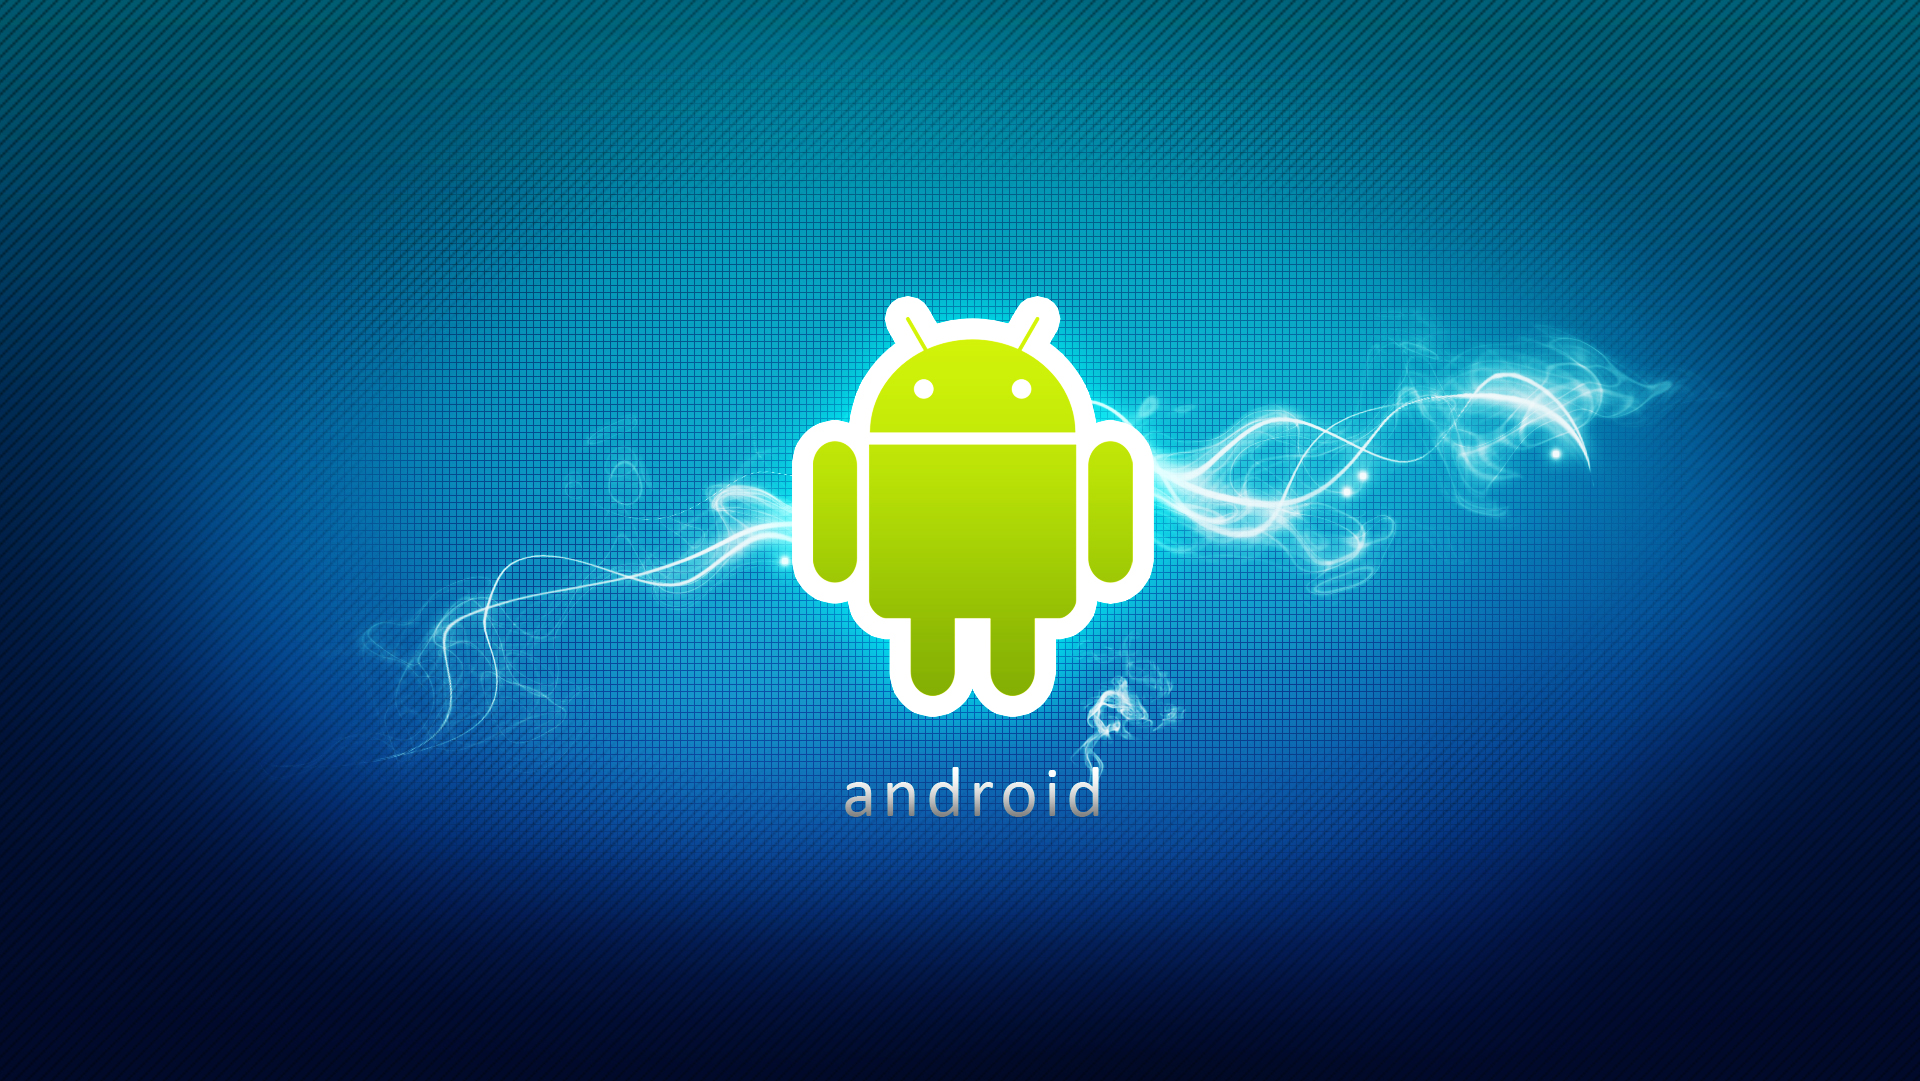 Android Logo Wallpaper - Technology HD Wallpapers - HDwallpapers.net